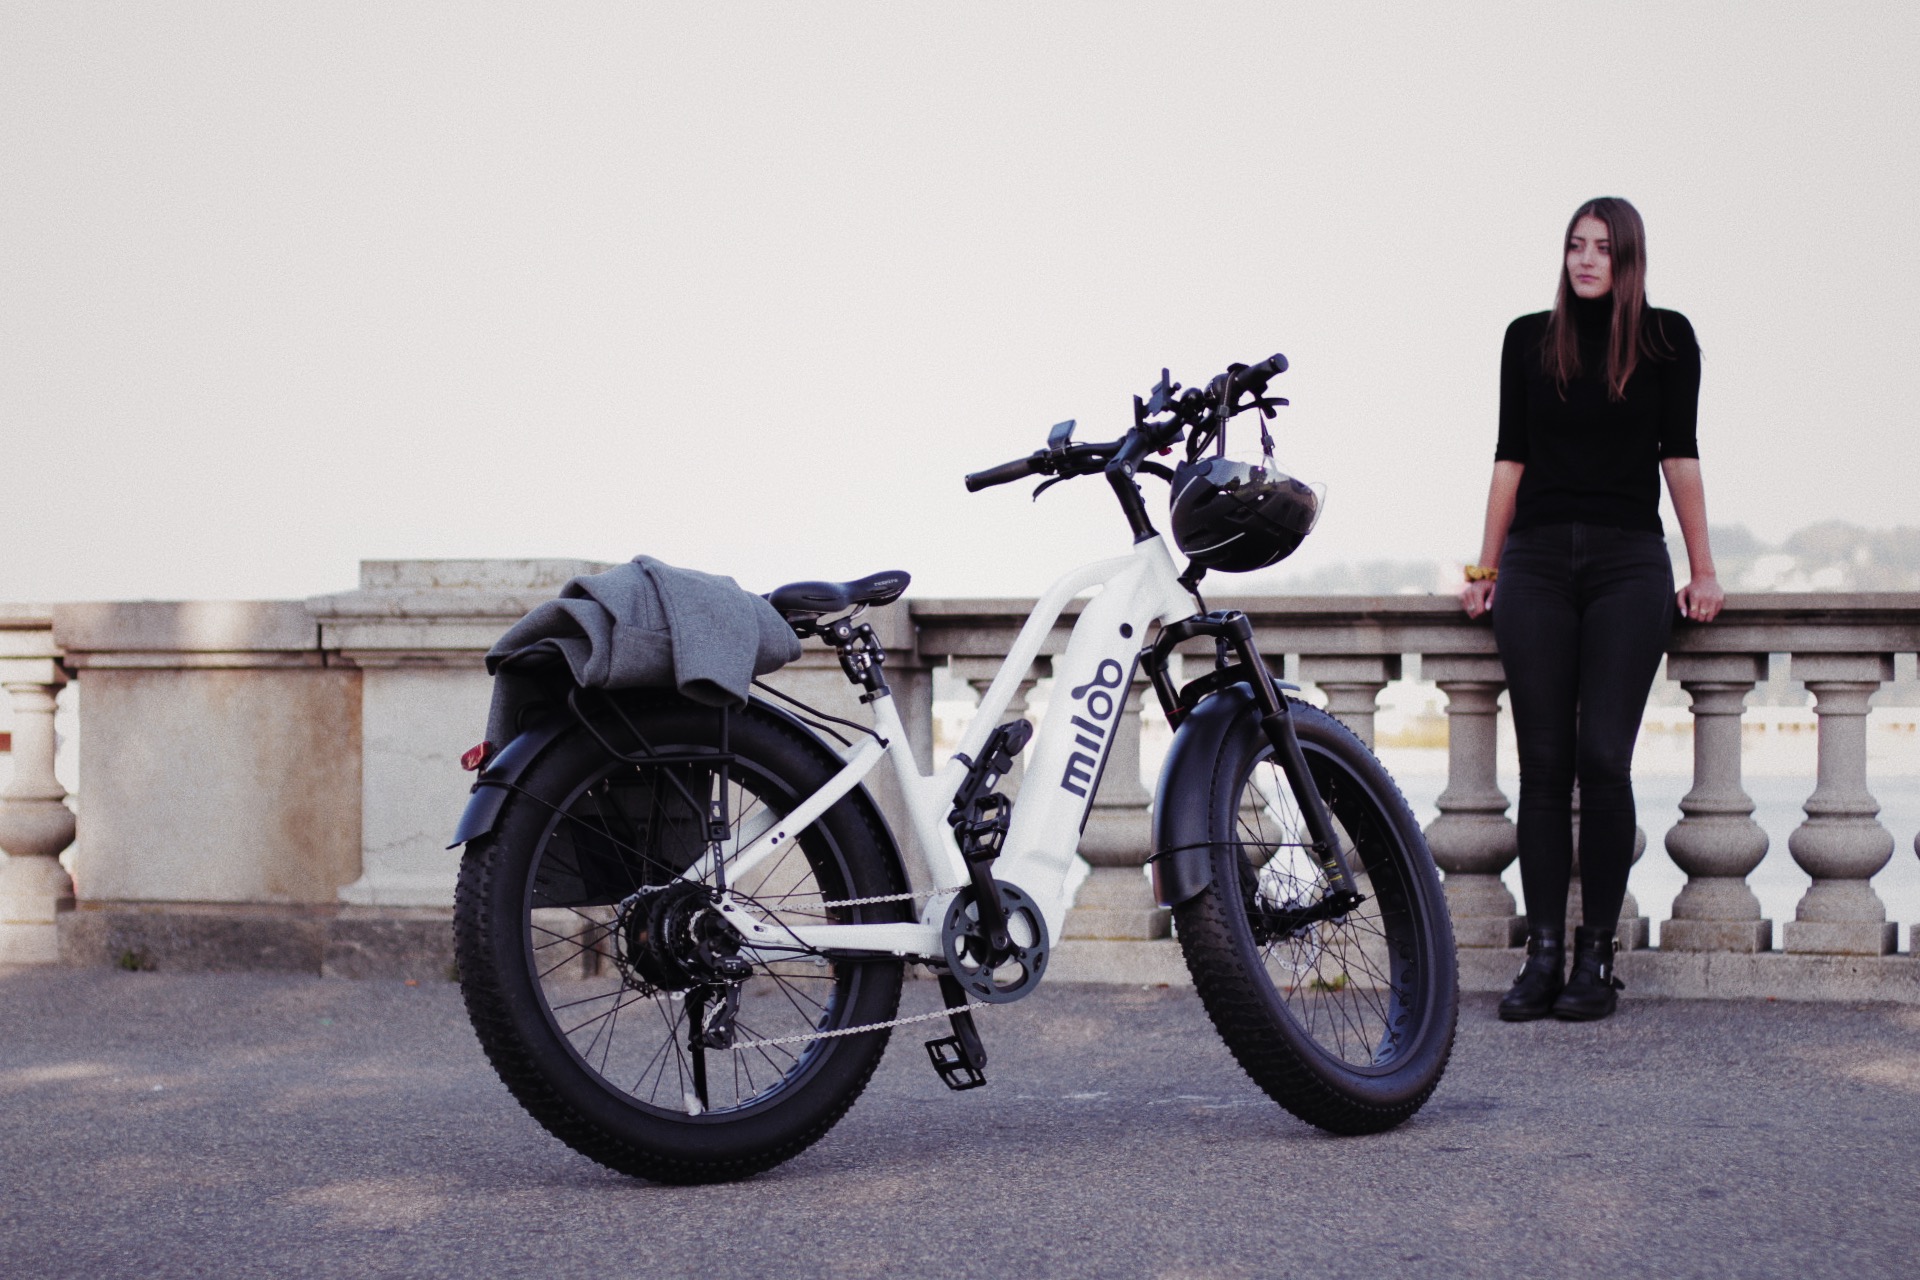 Miloo bike and woman